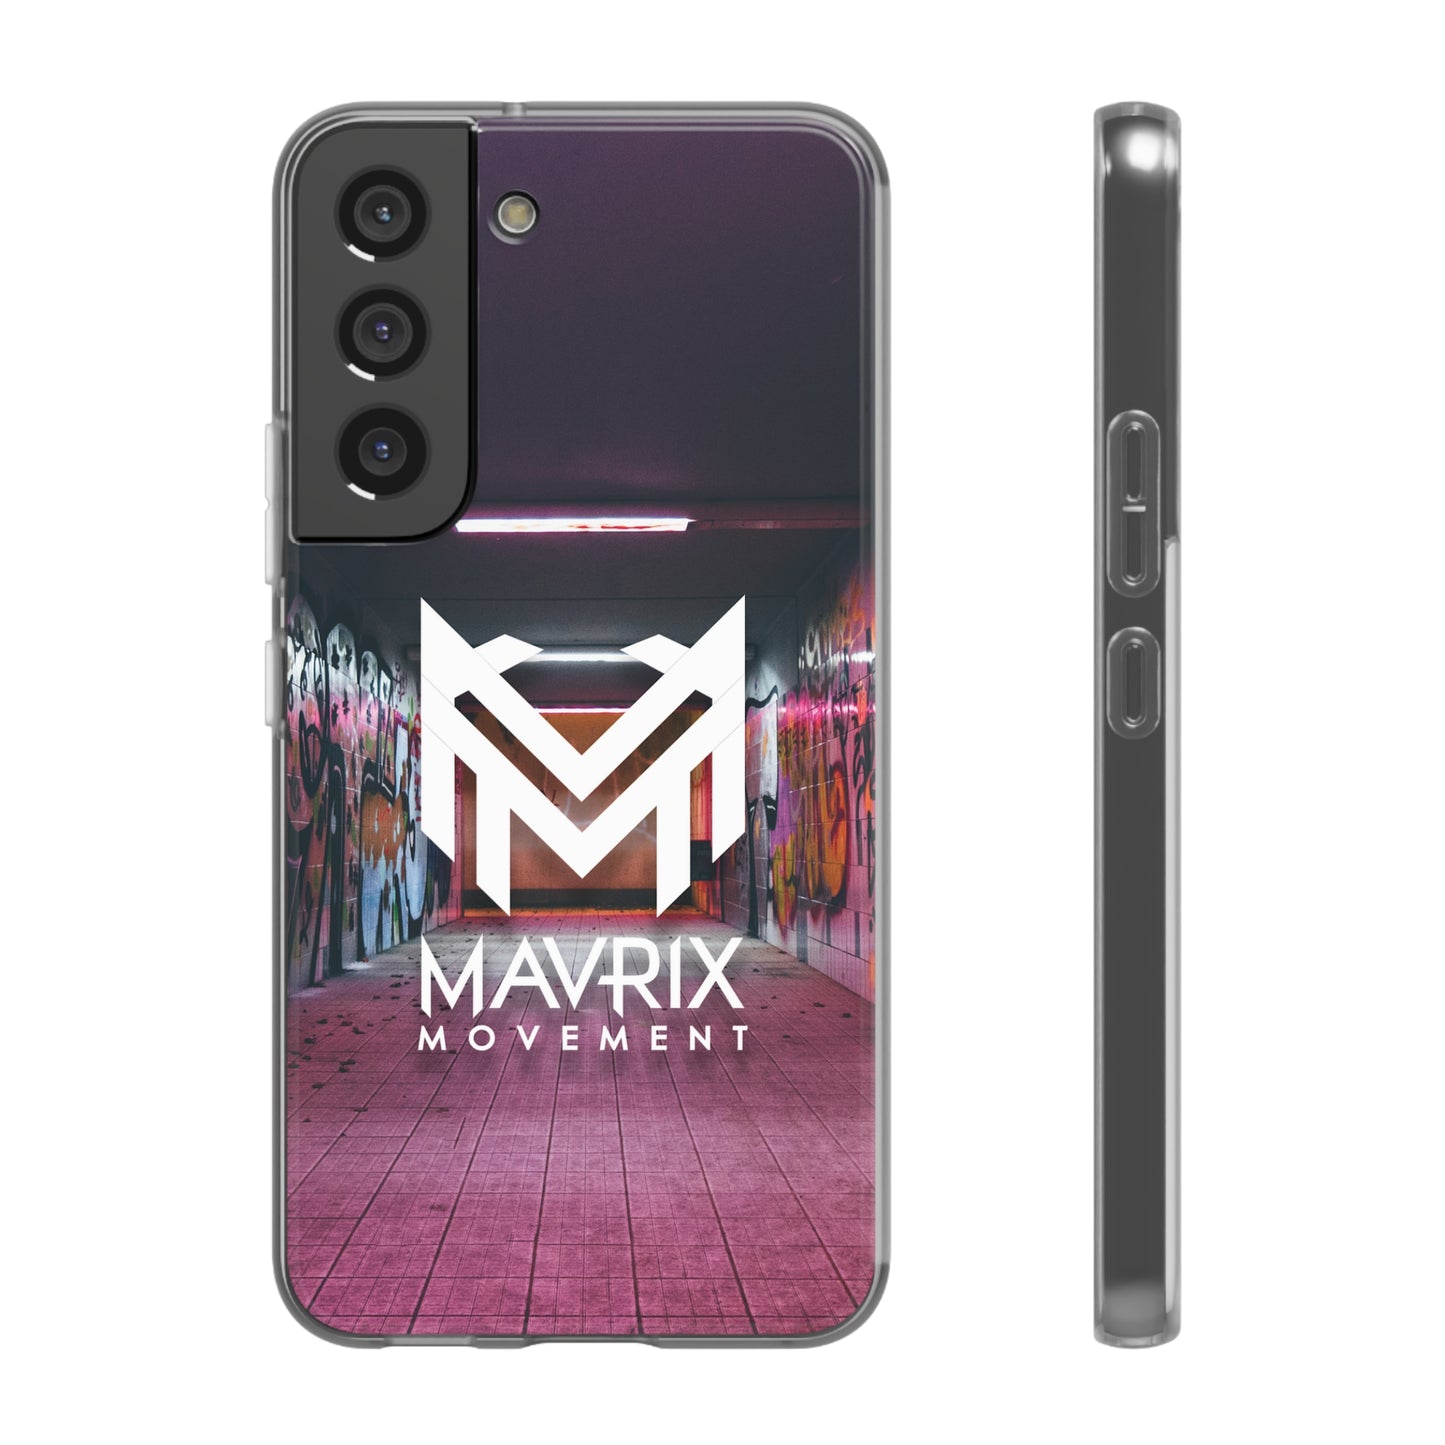 Mavrix Underground - Flexi Cases